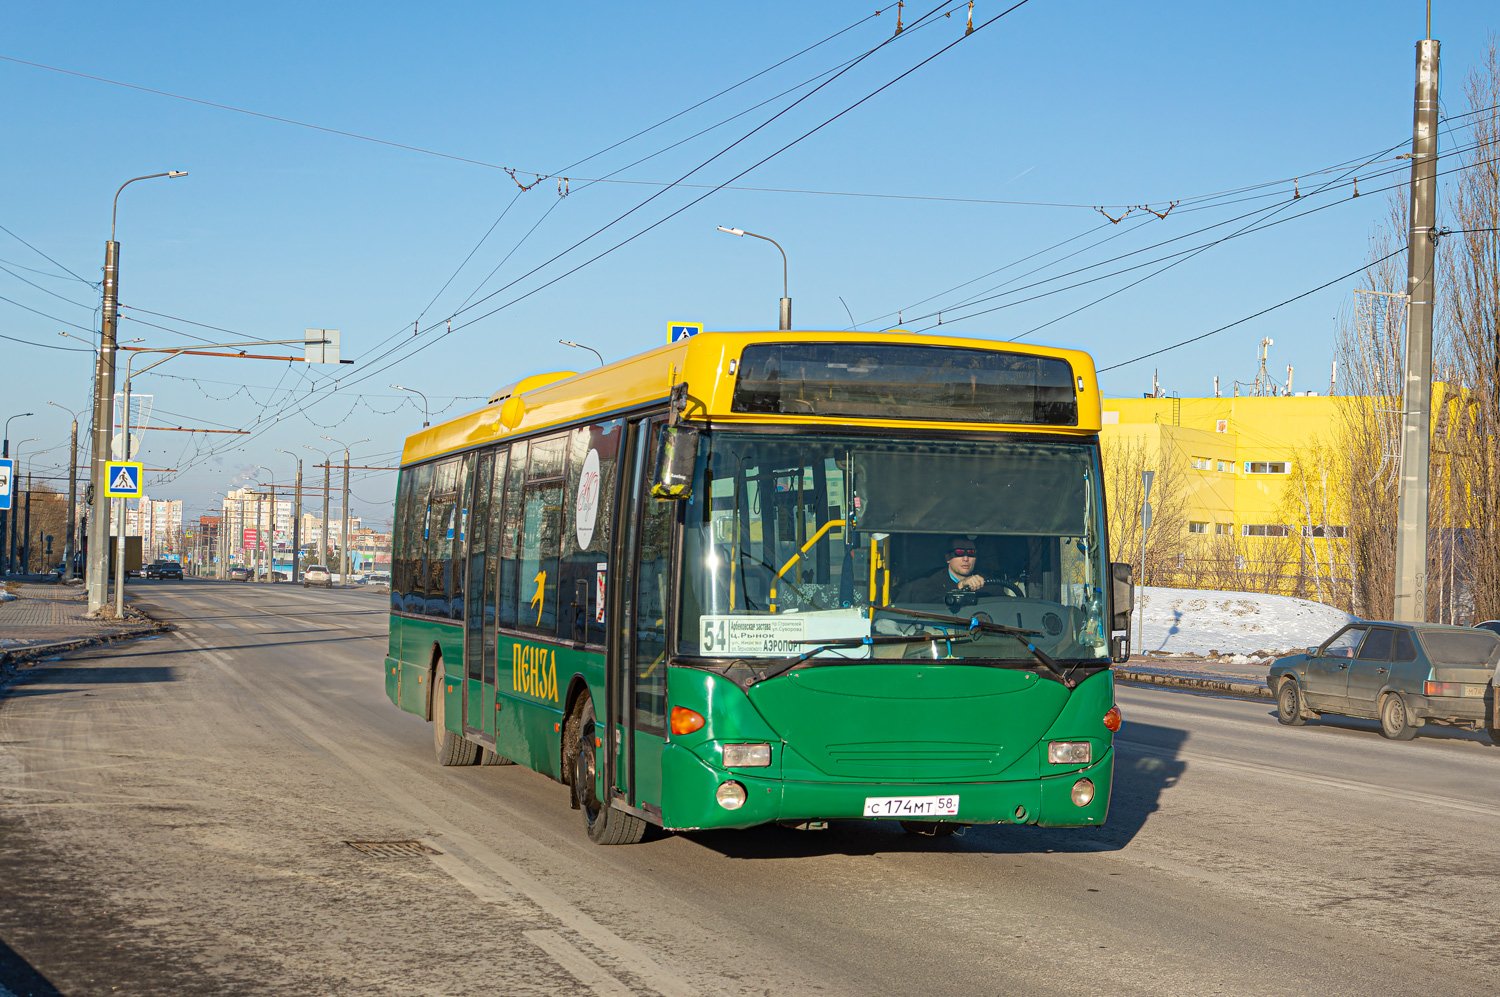 Penzai terület, Scania OmniLink I (Scania-St.Petersburg) sz.: С 174 МТ 58